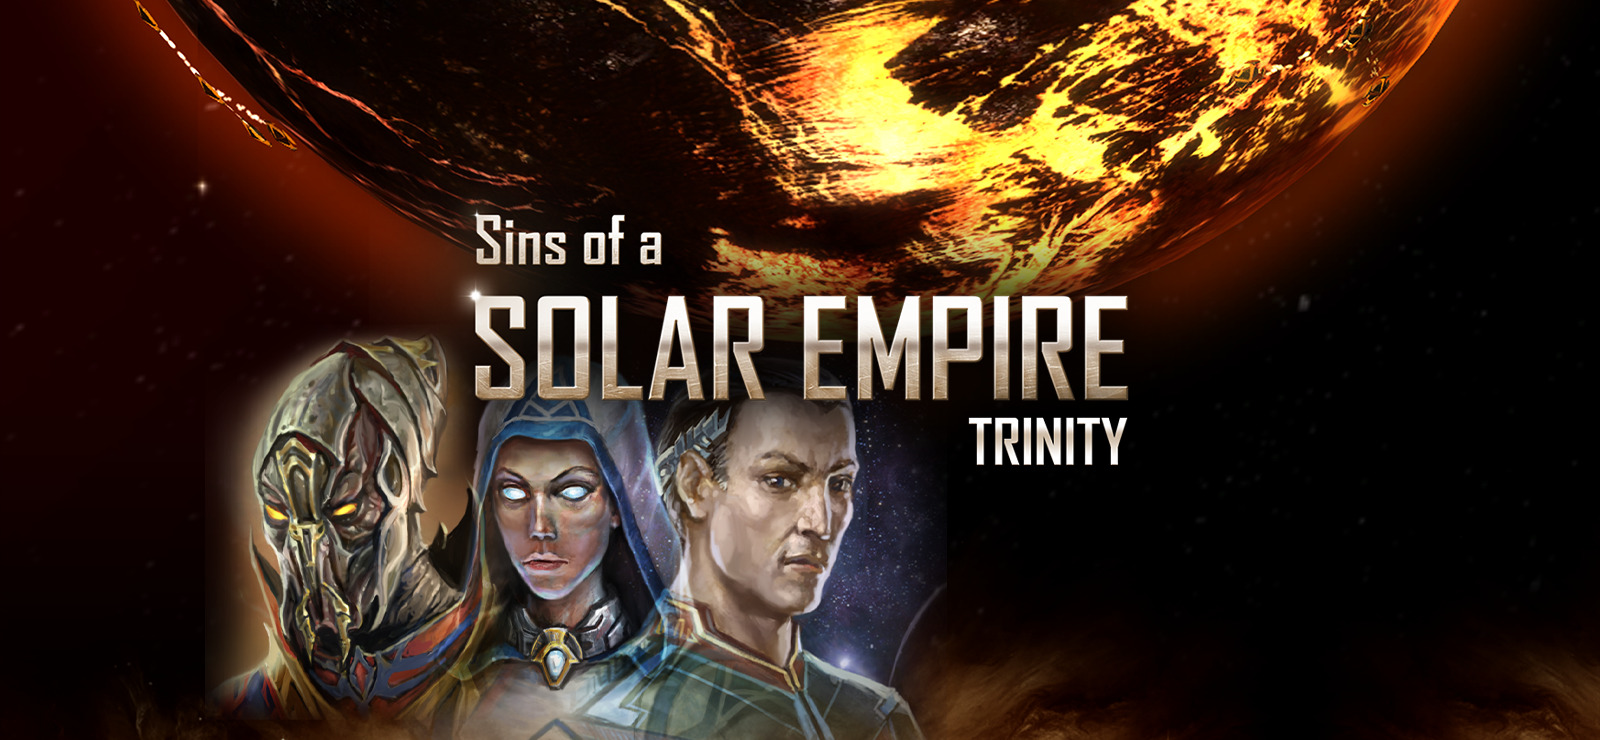 Sins of a solar empire 1.18 trainer